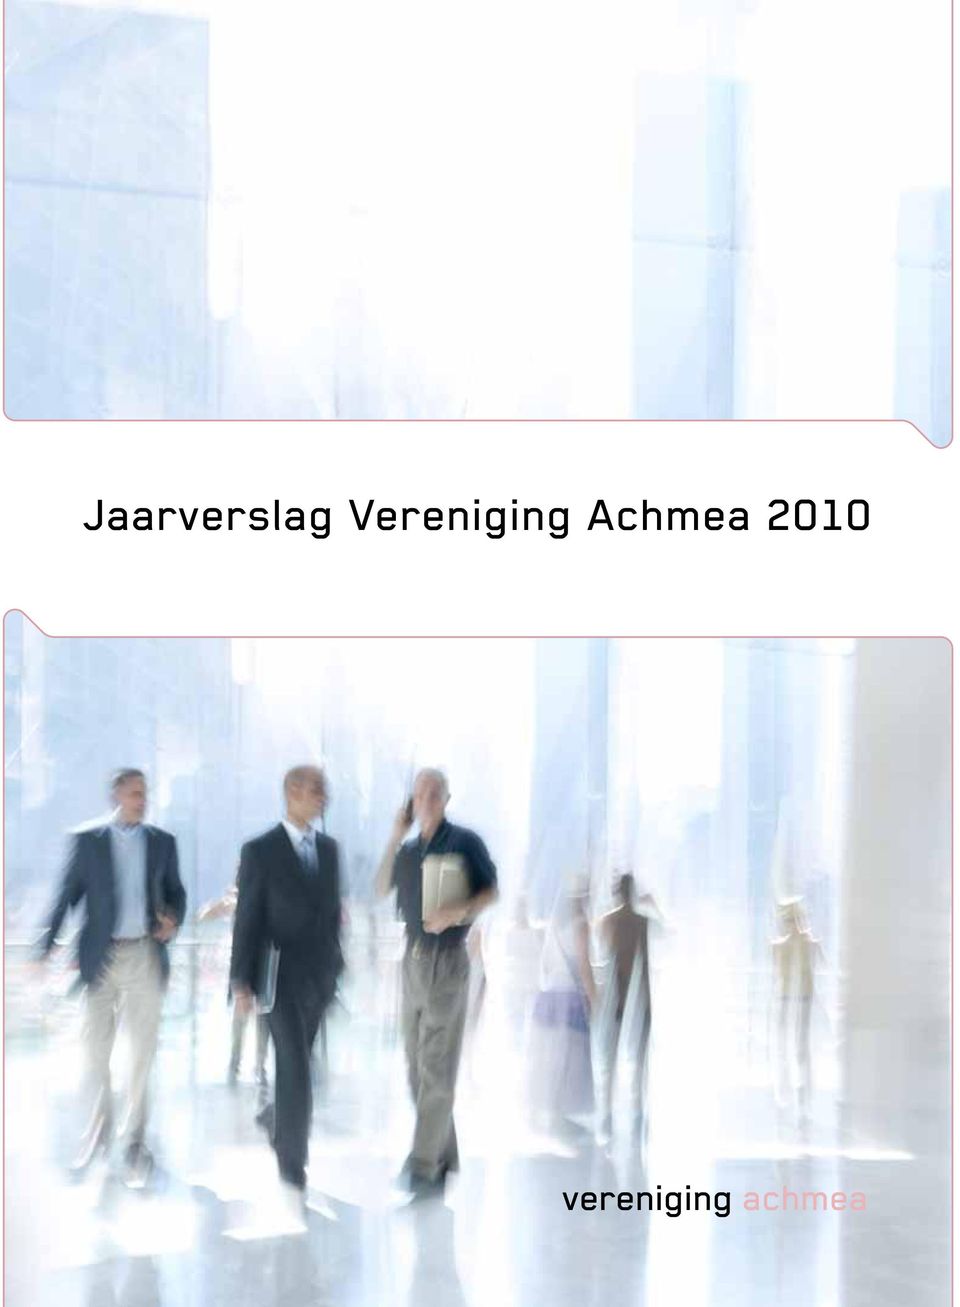 Achmea 2010